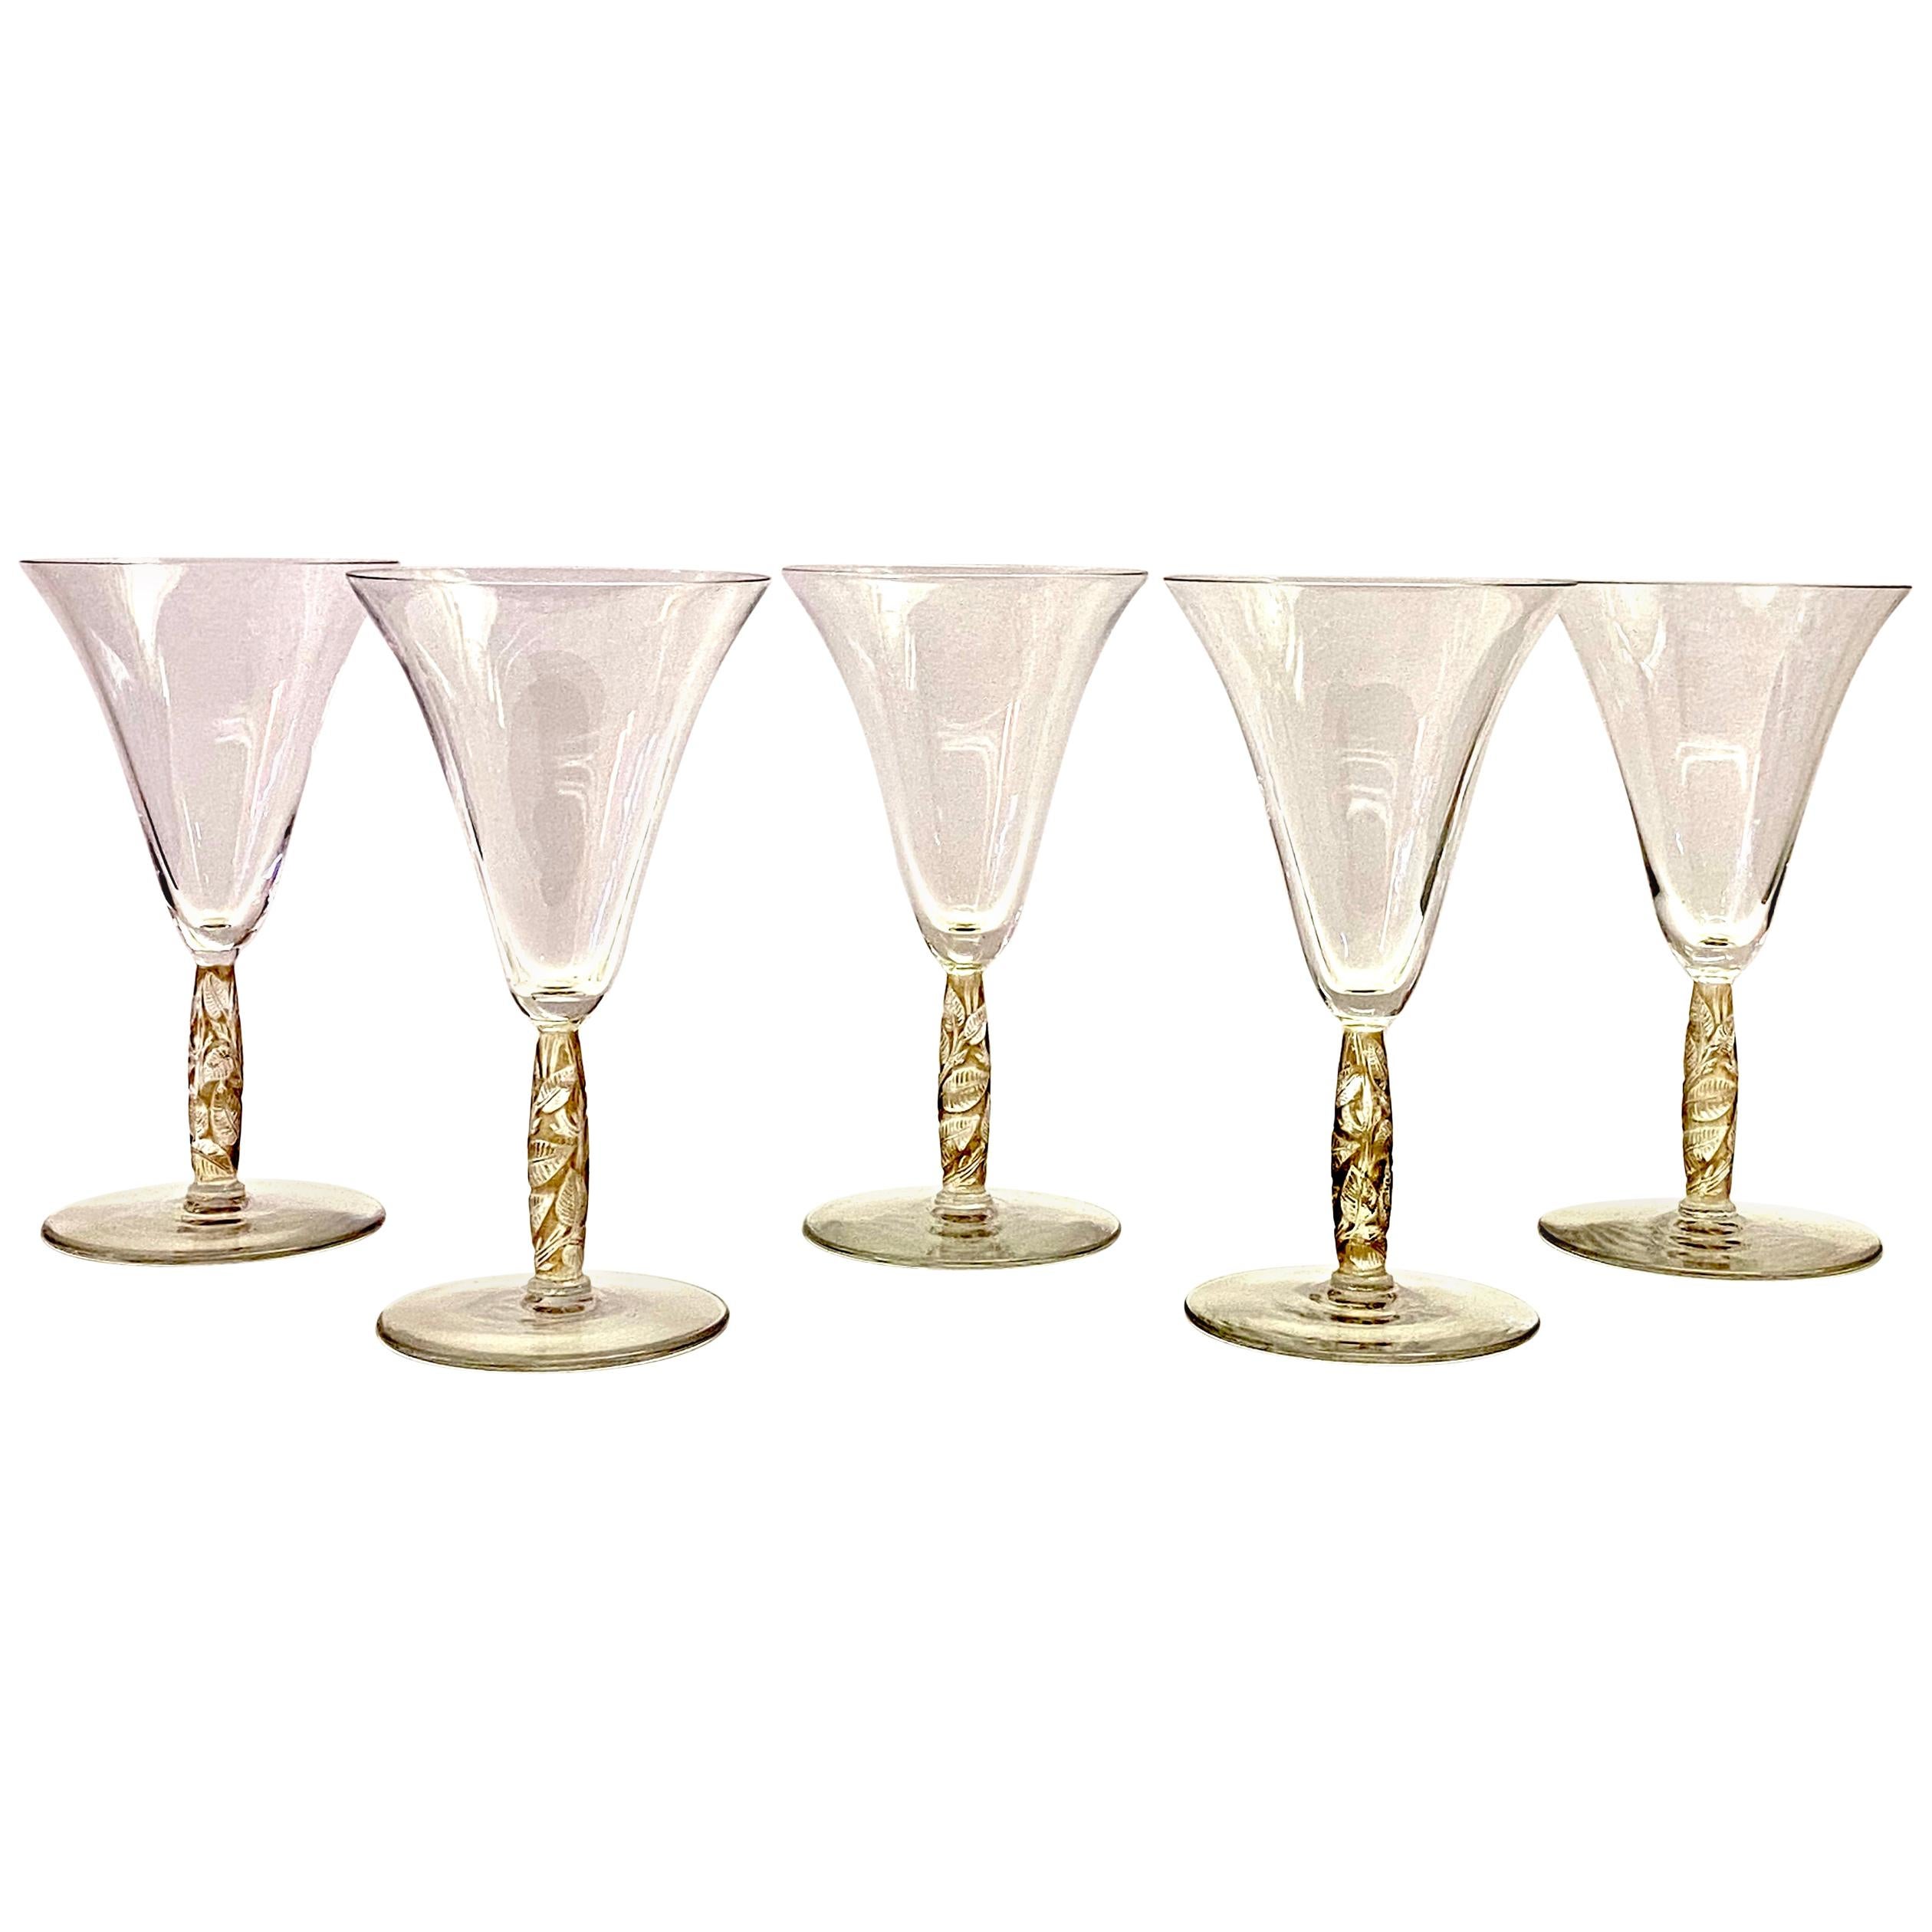 1925 René Lalique Set of 5 Pieces Glasses Logelbach Sepia Patina